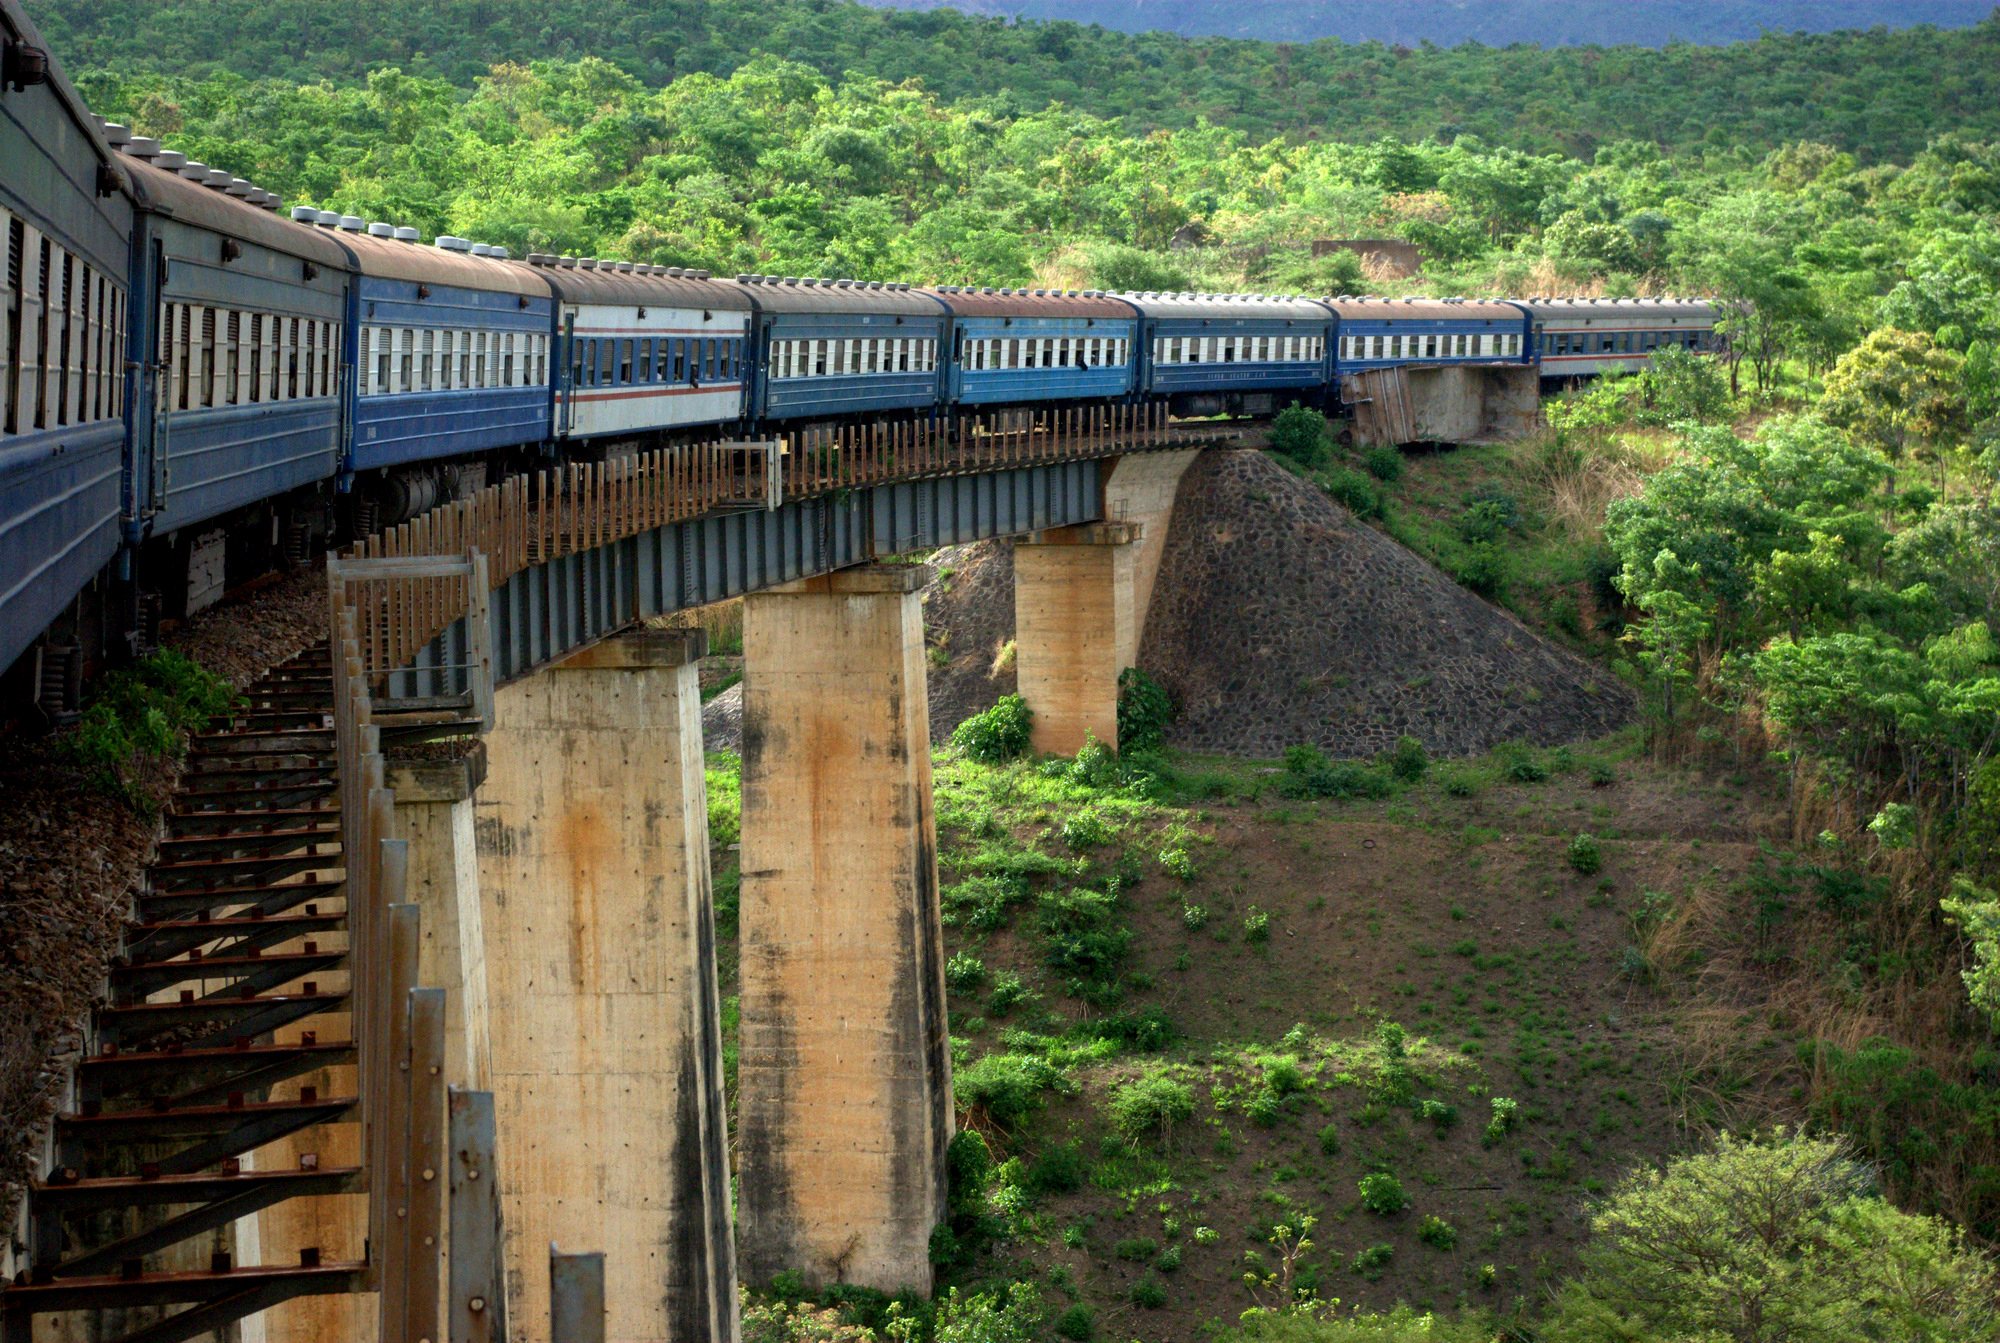 techbiz.network Tazara Railway, Tanzania and Zambia